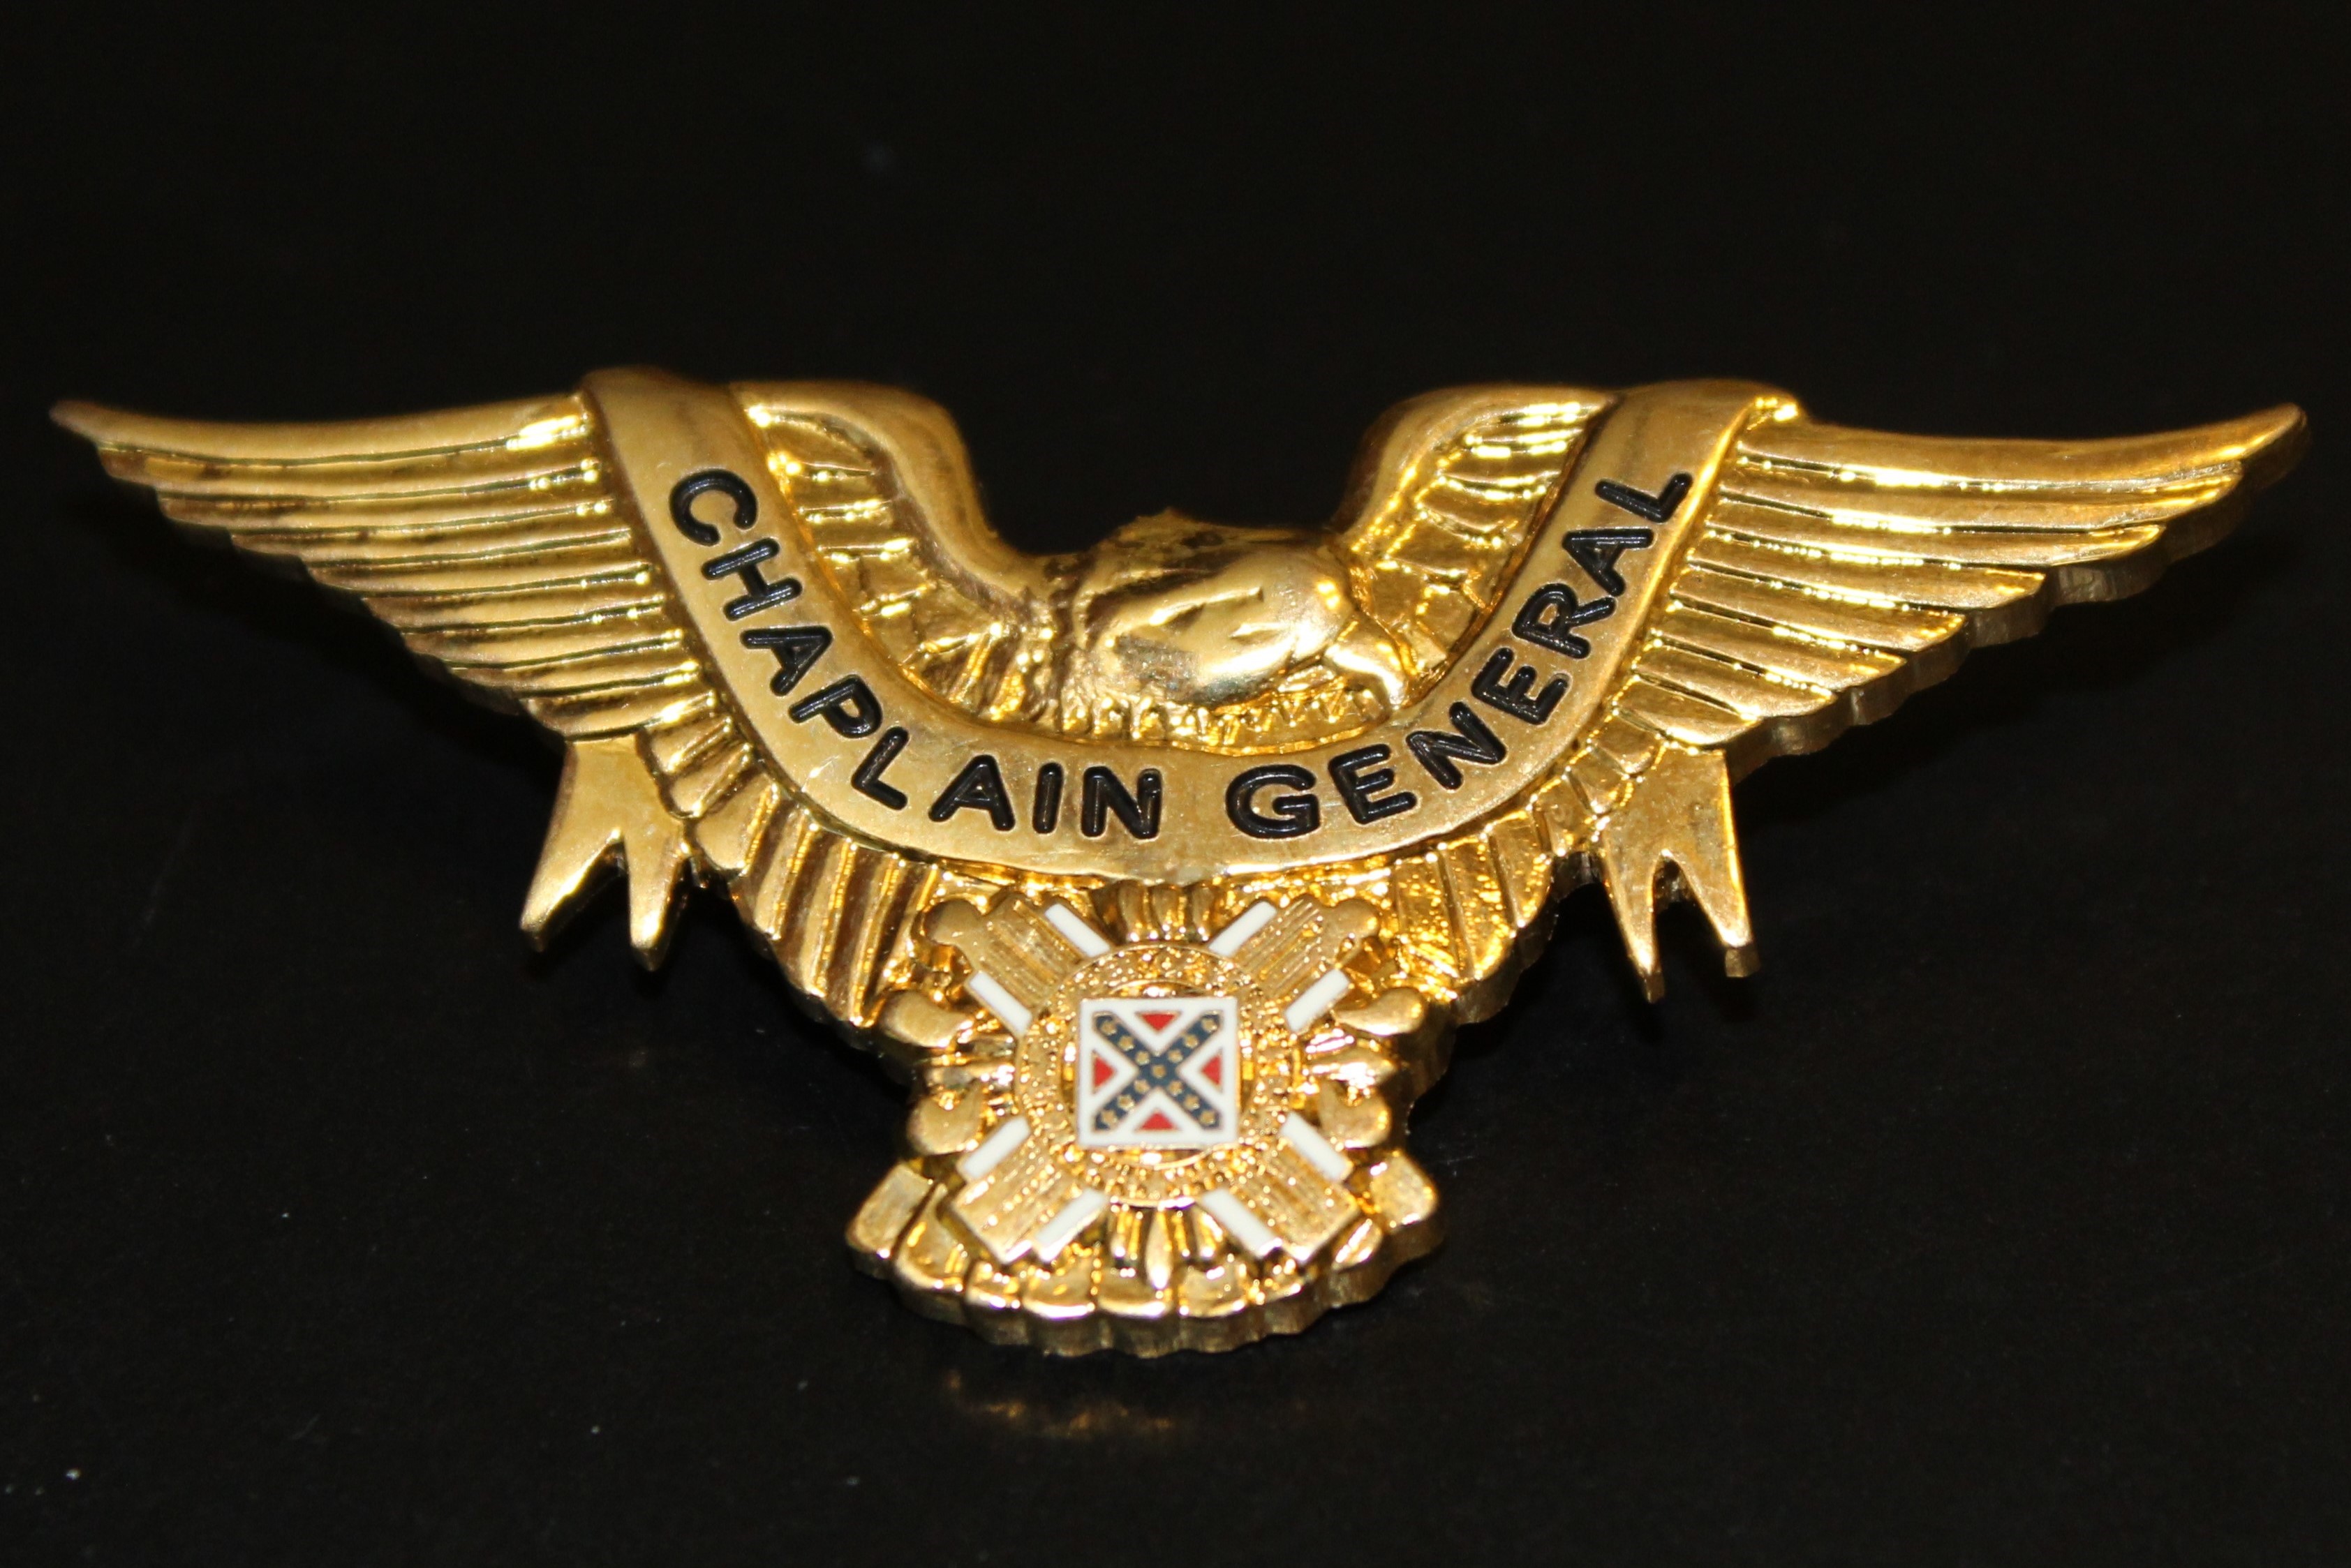 Eagle, Chaplain General